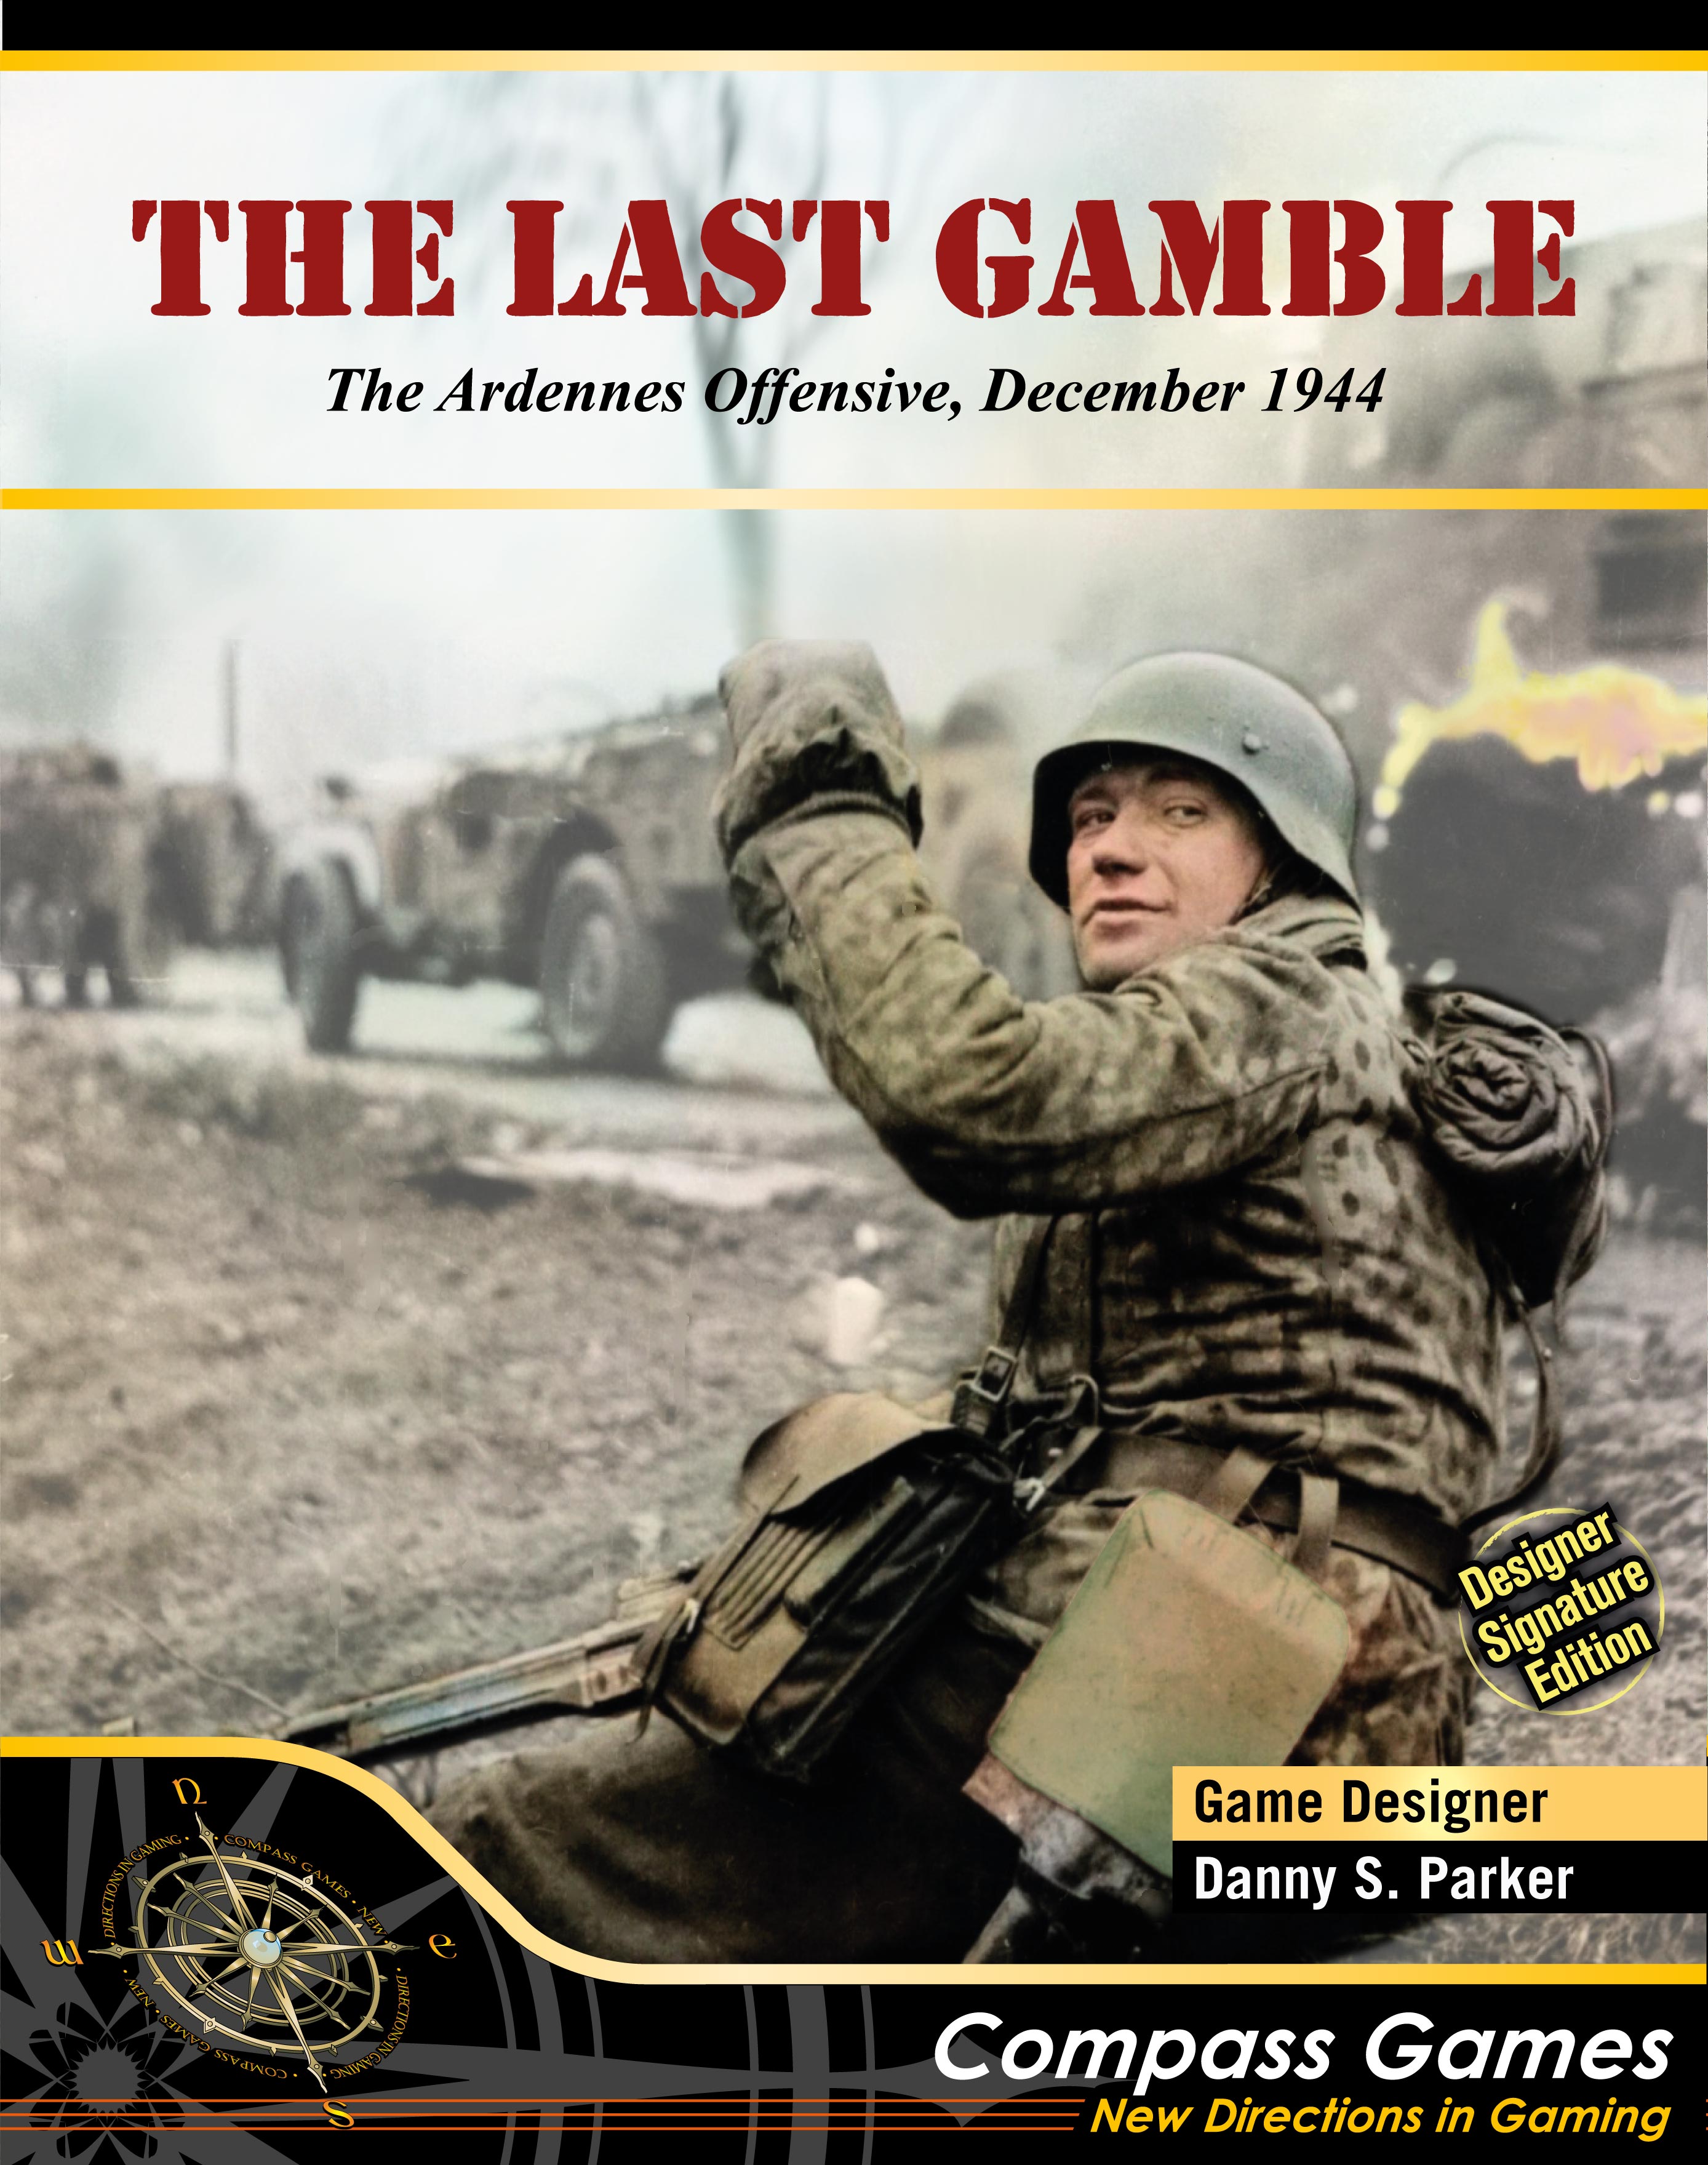 The Last Gamble, Battle of the Bulge DSE